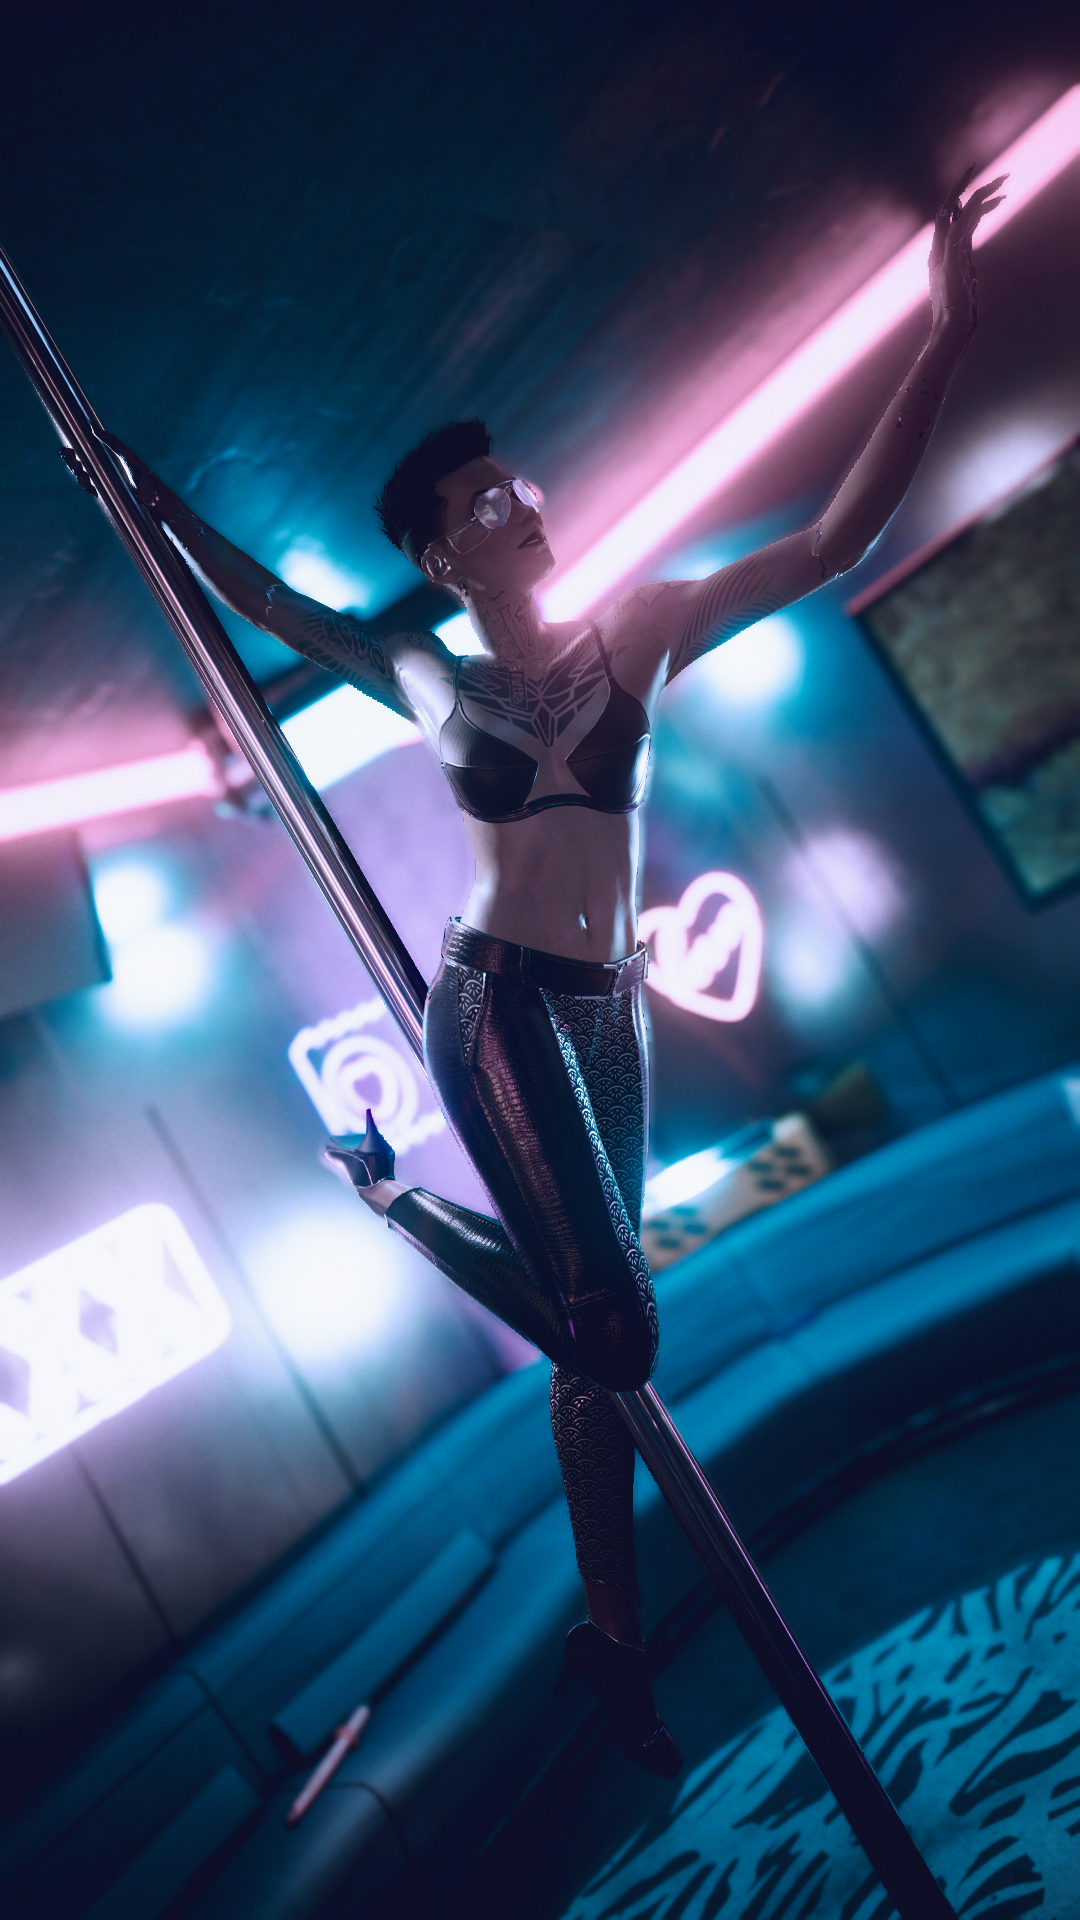 Pole dancing at cyberpunk nexus